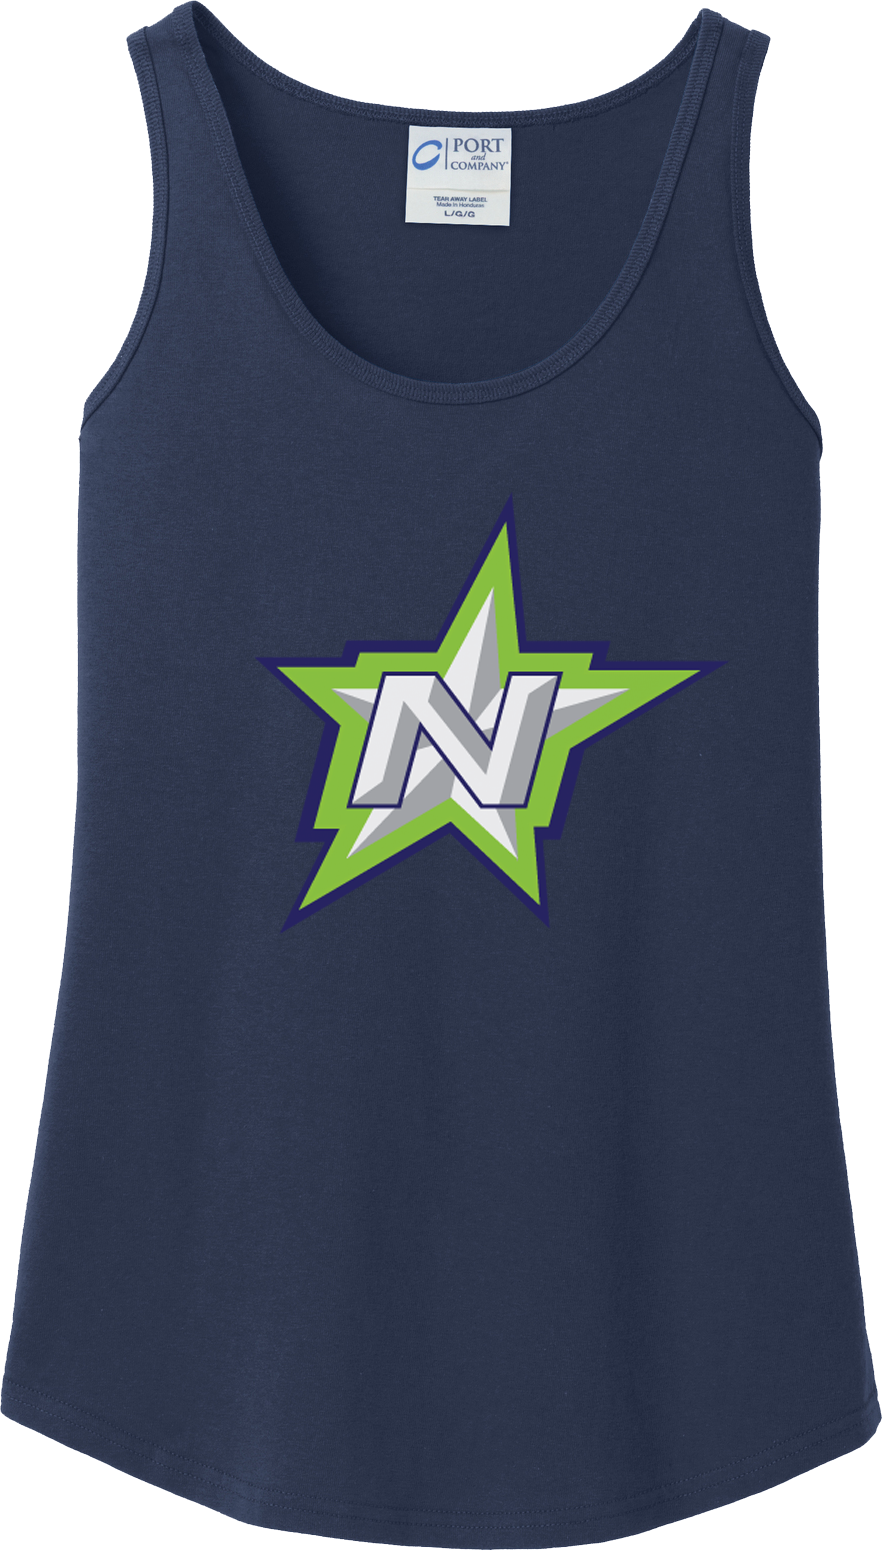 Northstar Baseball Women's Navy Tank Top